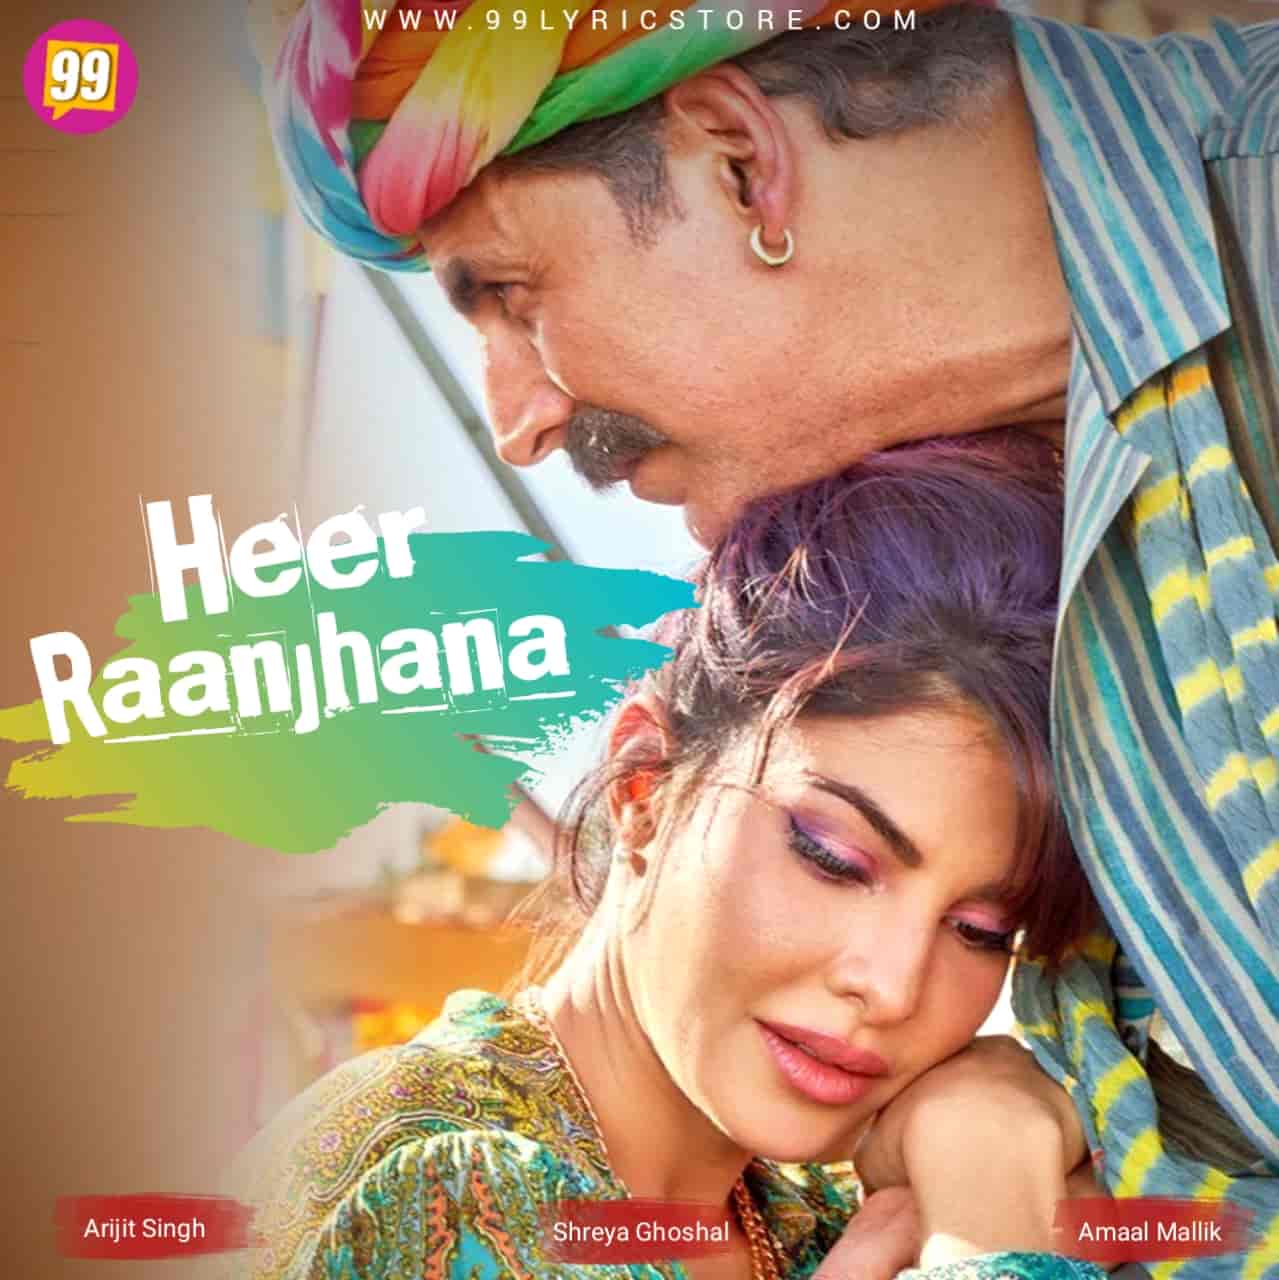 Heer Raanjhana Hindi Song Image From Movie Bachchan Paandey.